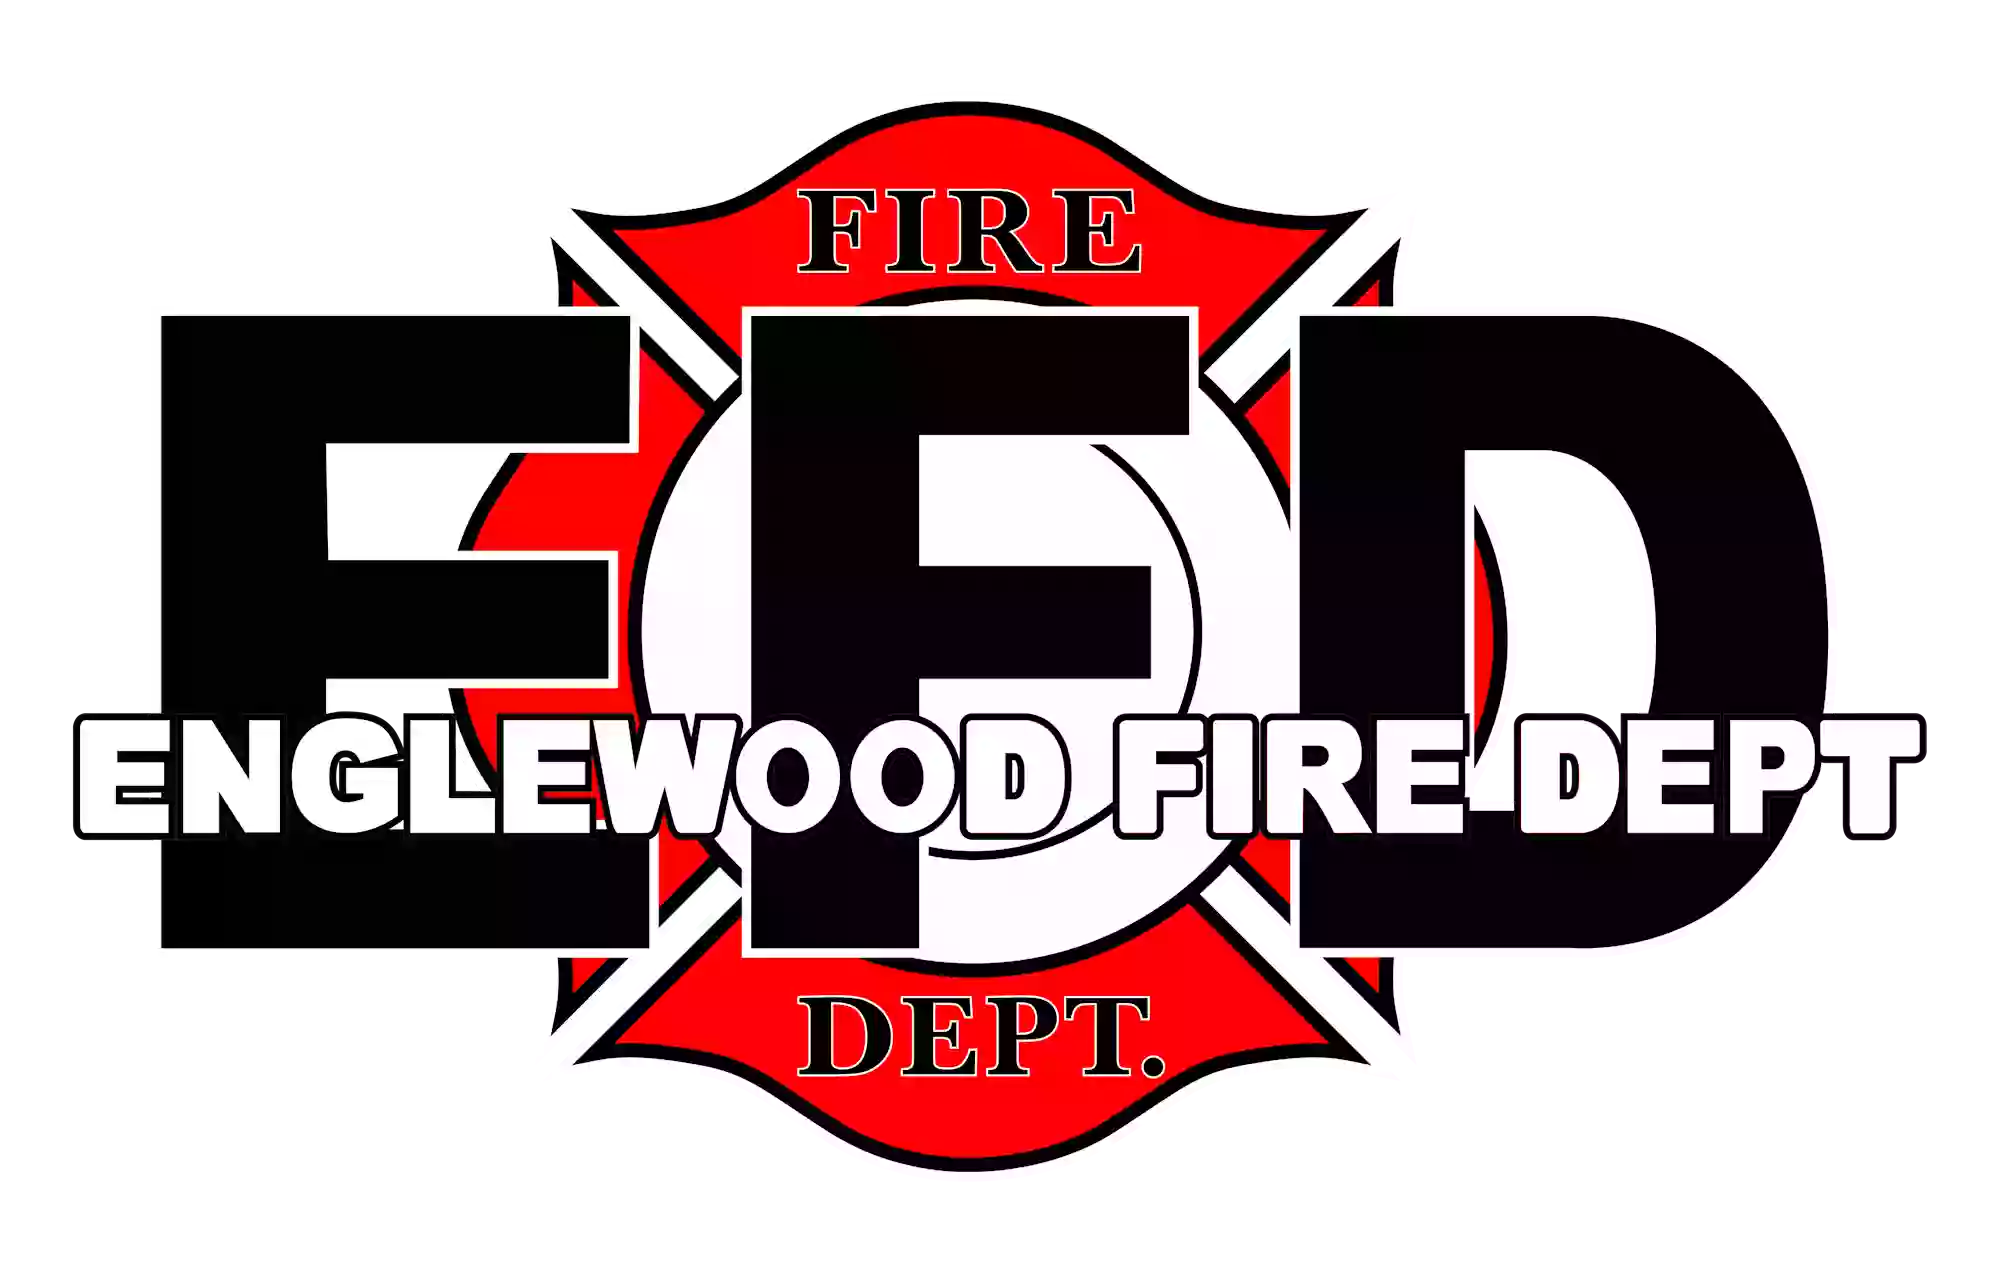 Englewood Fire Department Training Center